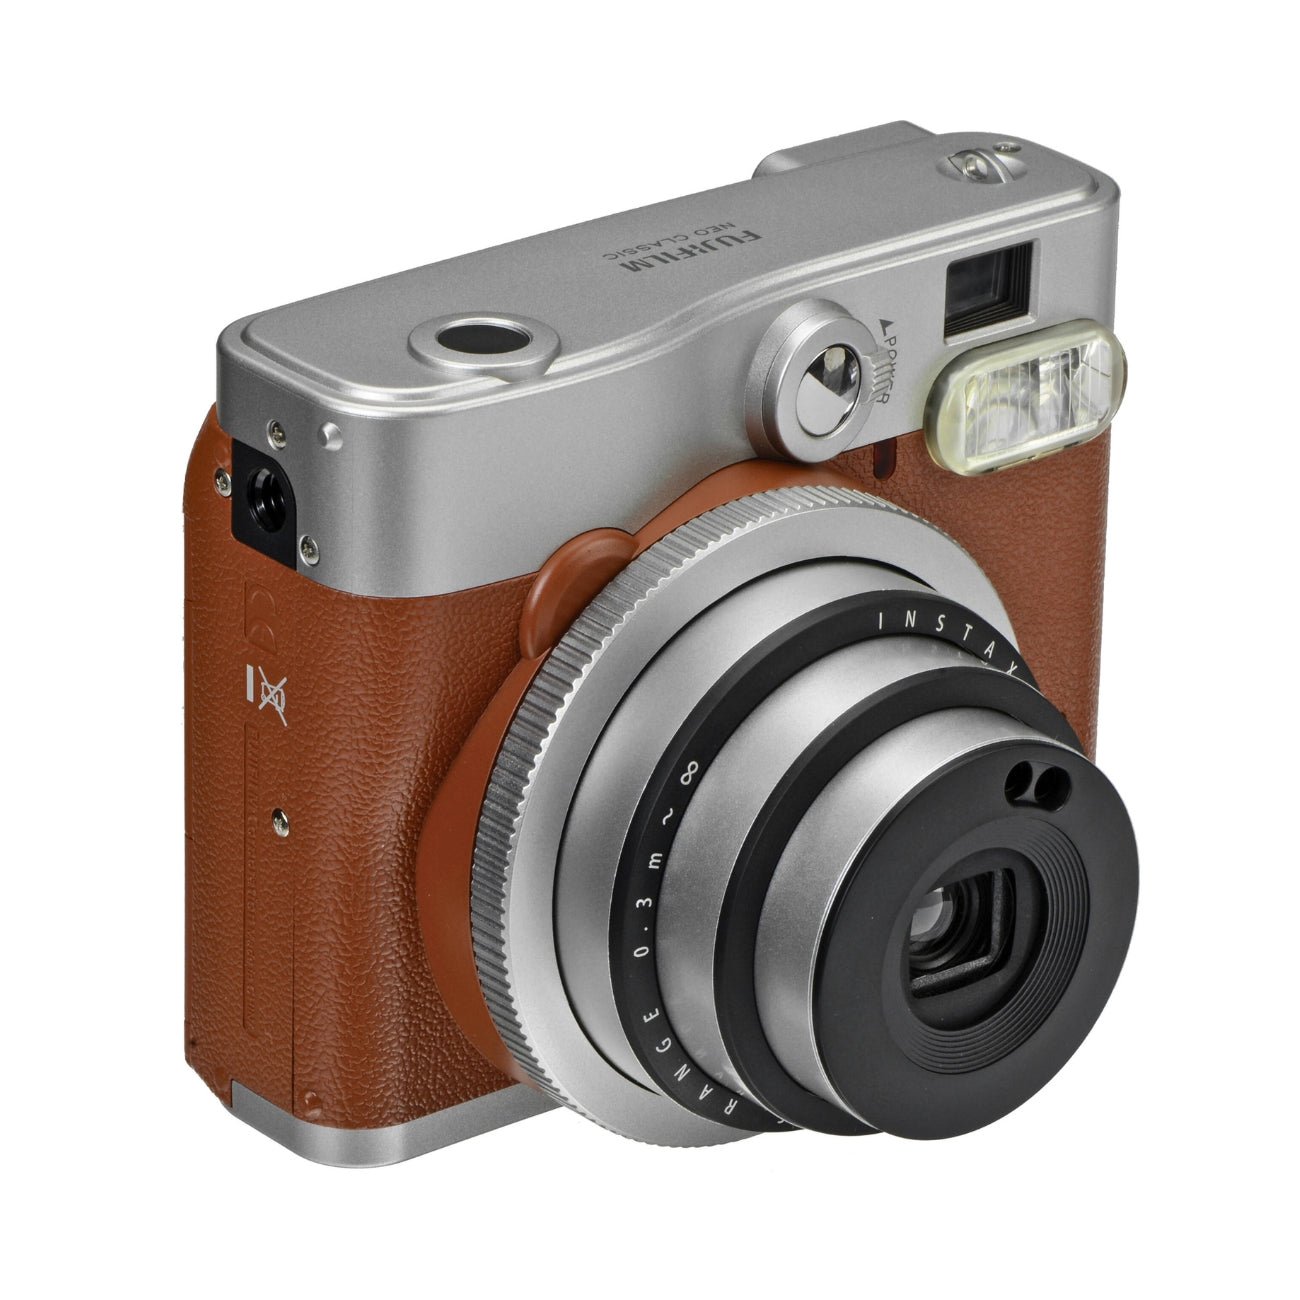 Fujifilm INSTAX Mini 90 Neo Classic Instant Camera (Brown) - Side View